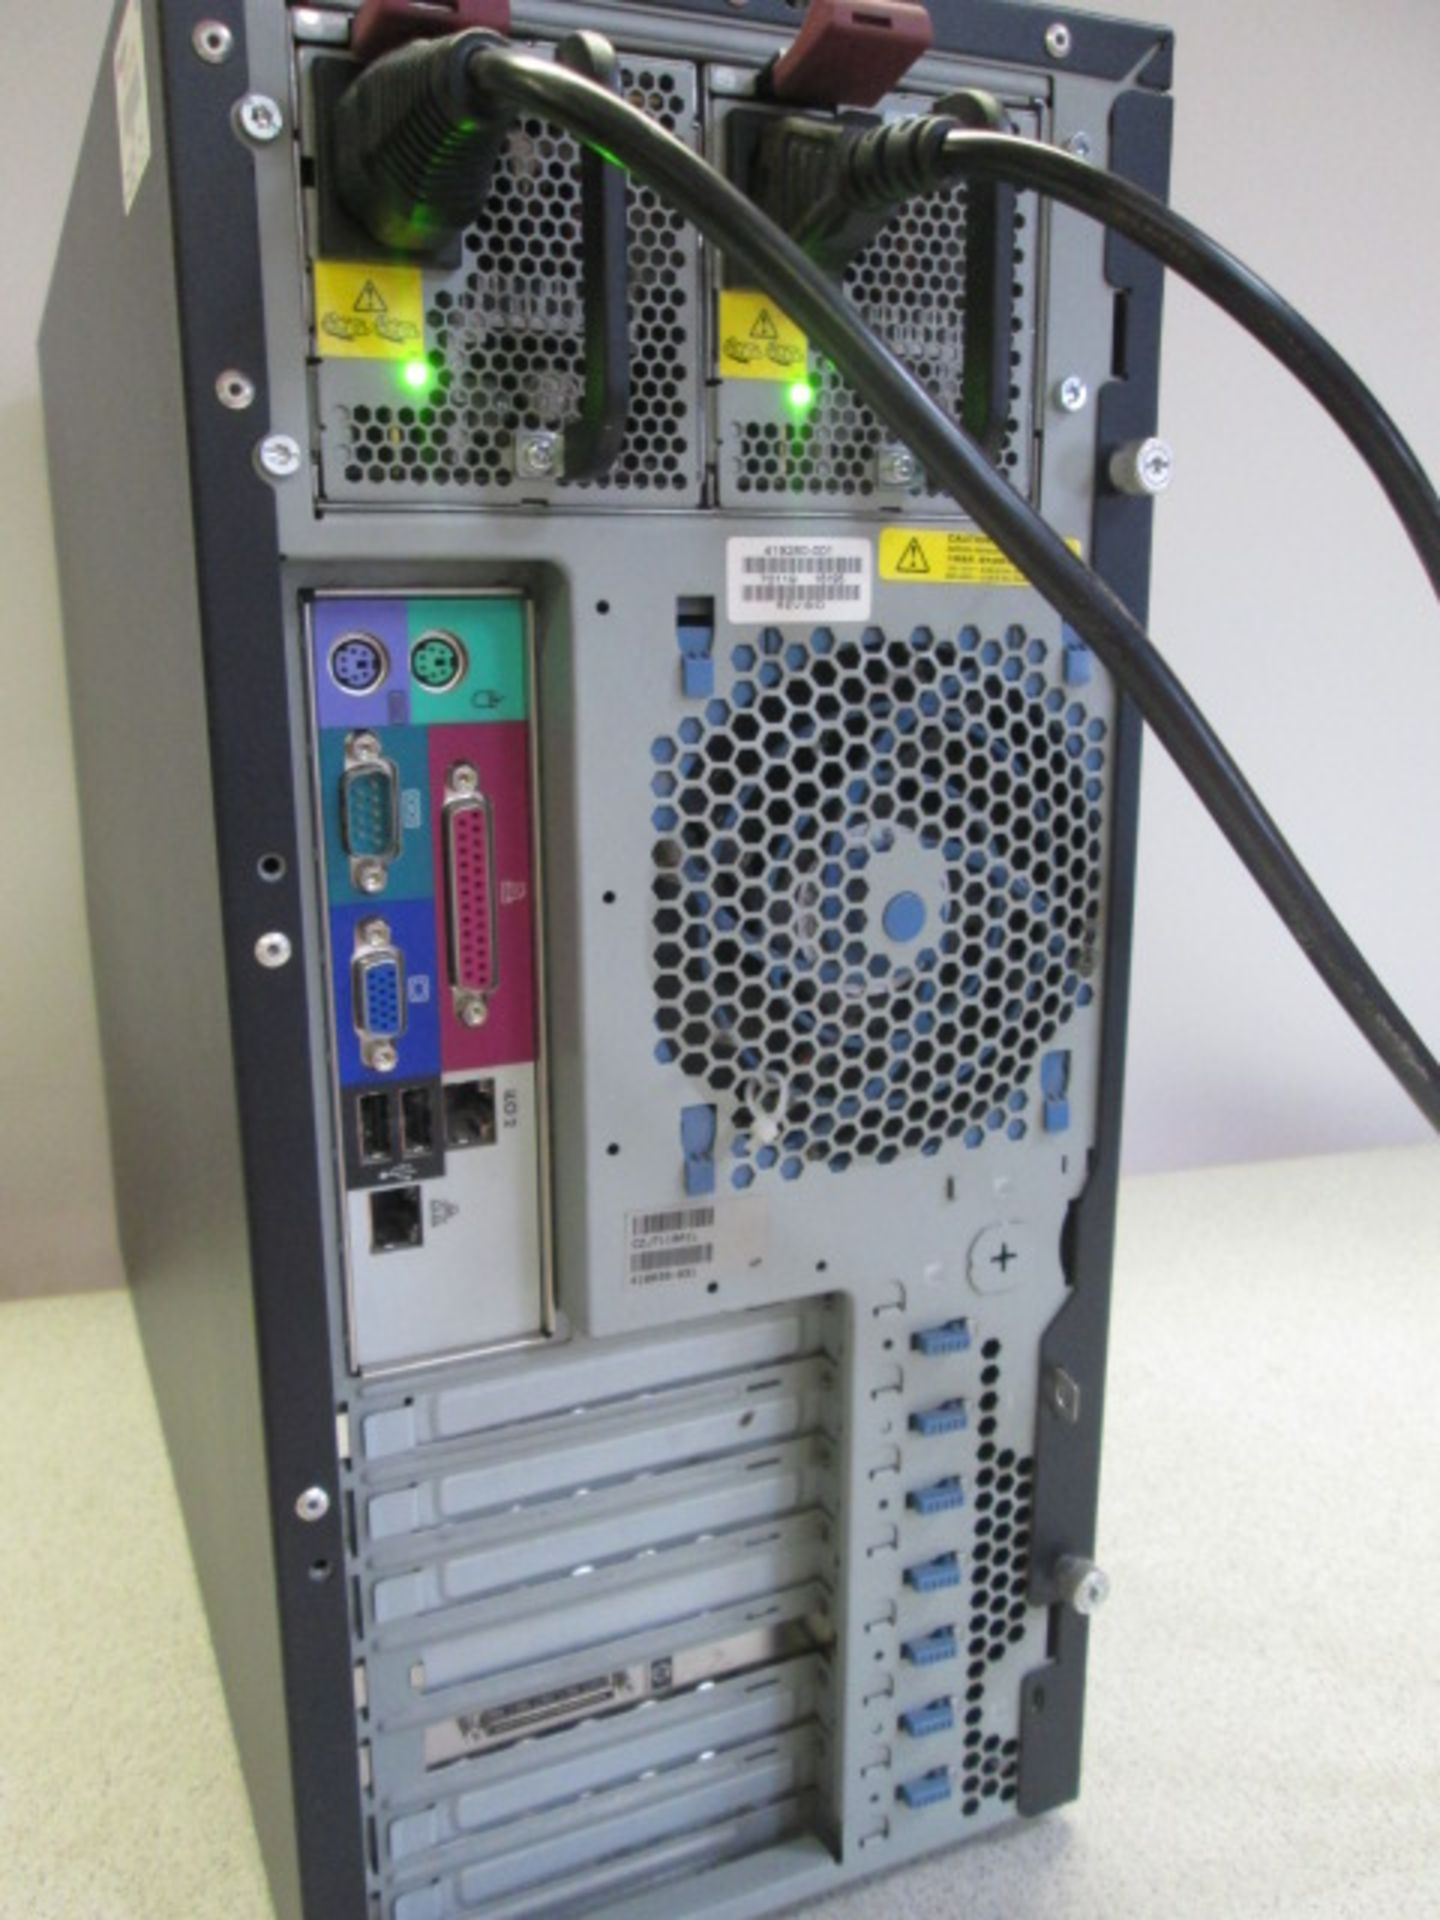 HP Proliant ML310 G4 Tower Server. 2 x Intel Xeon 3050 CPU @ 2.13GHz, 2GB RAM. - Image 6 of 6